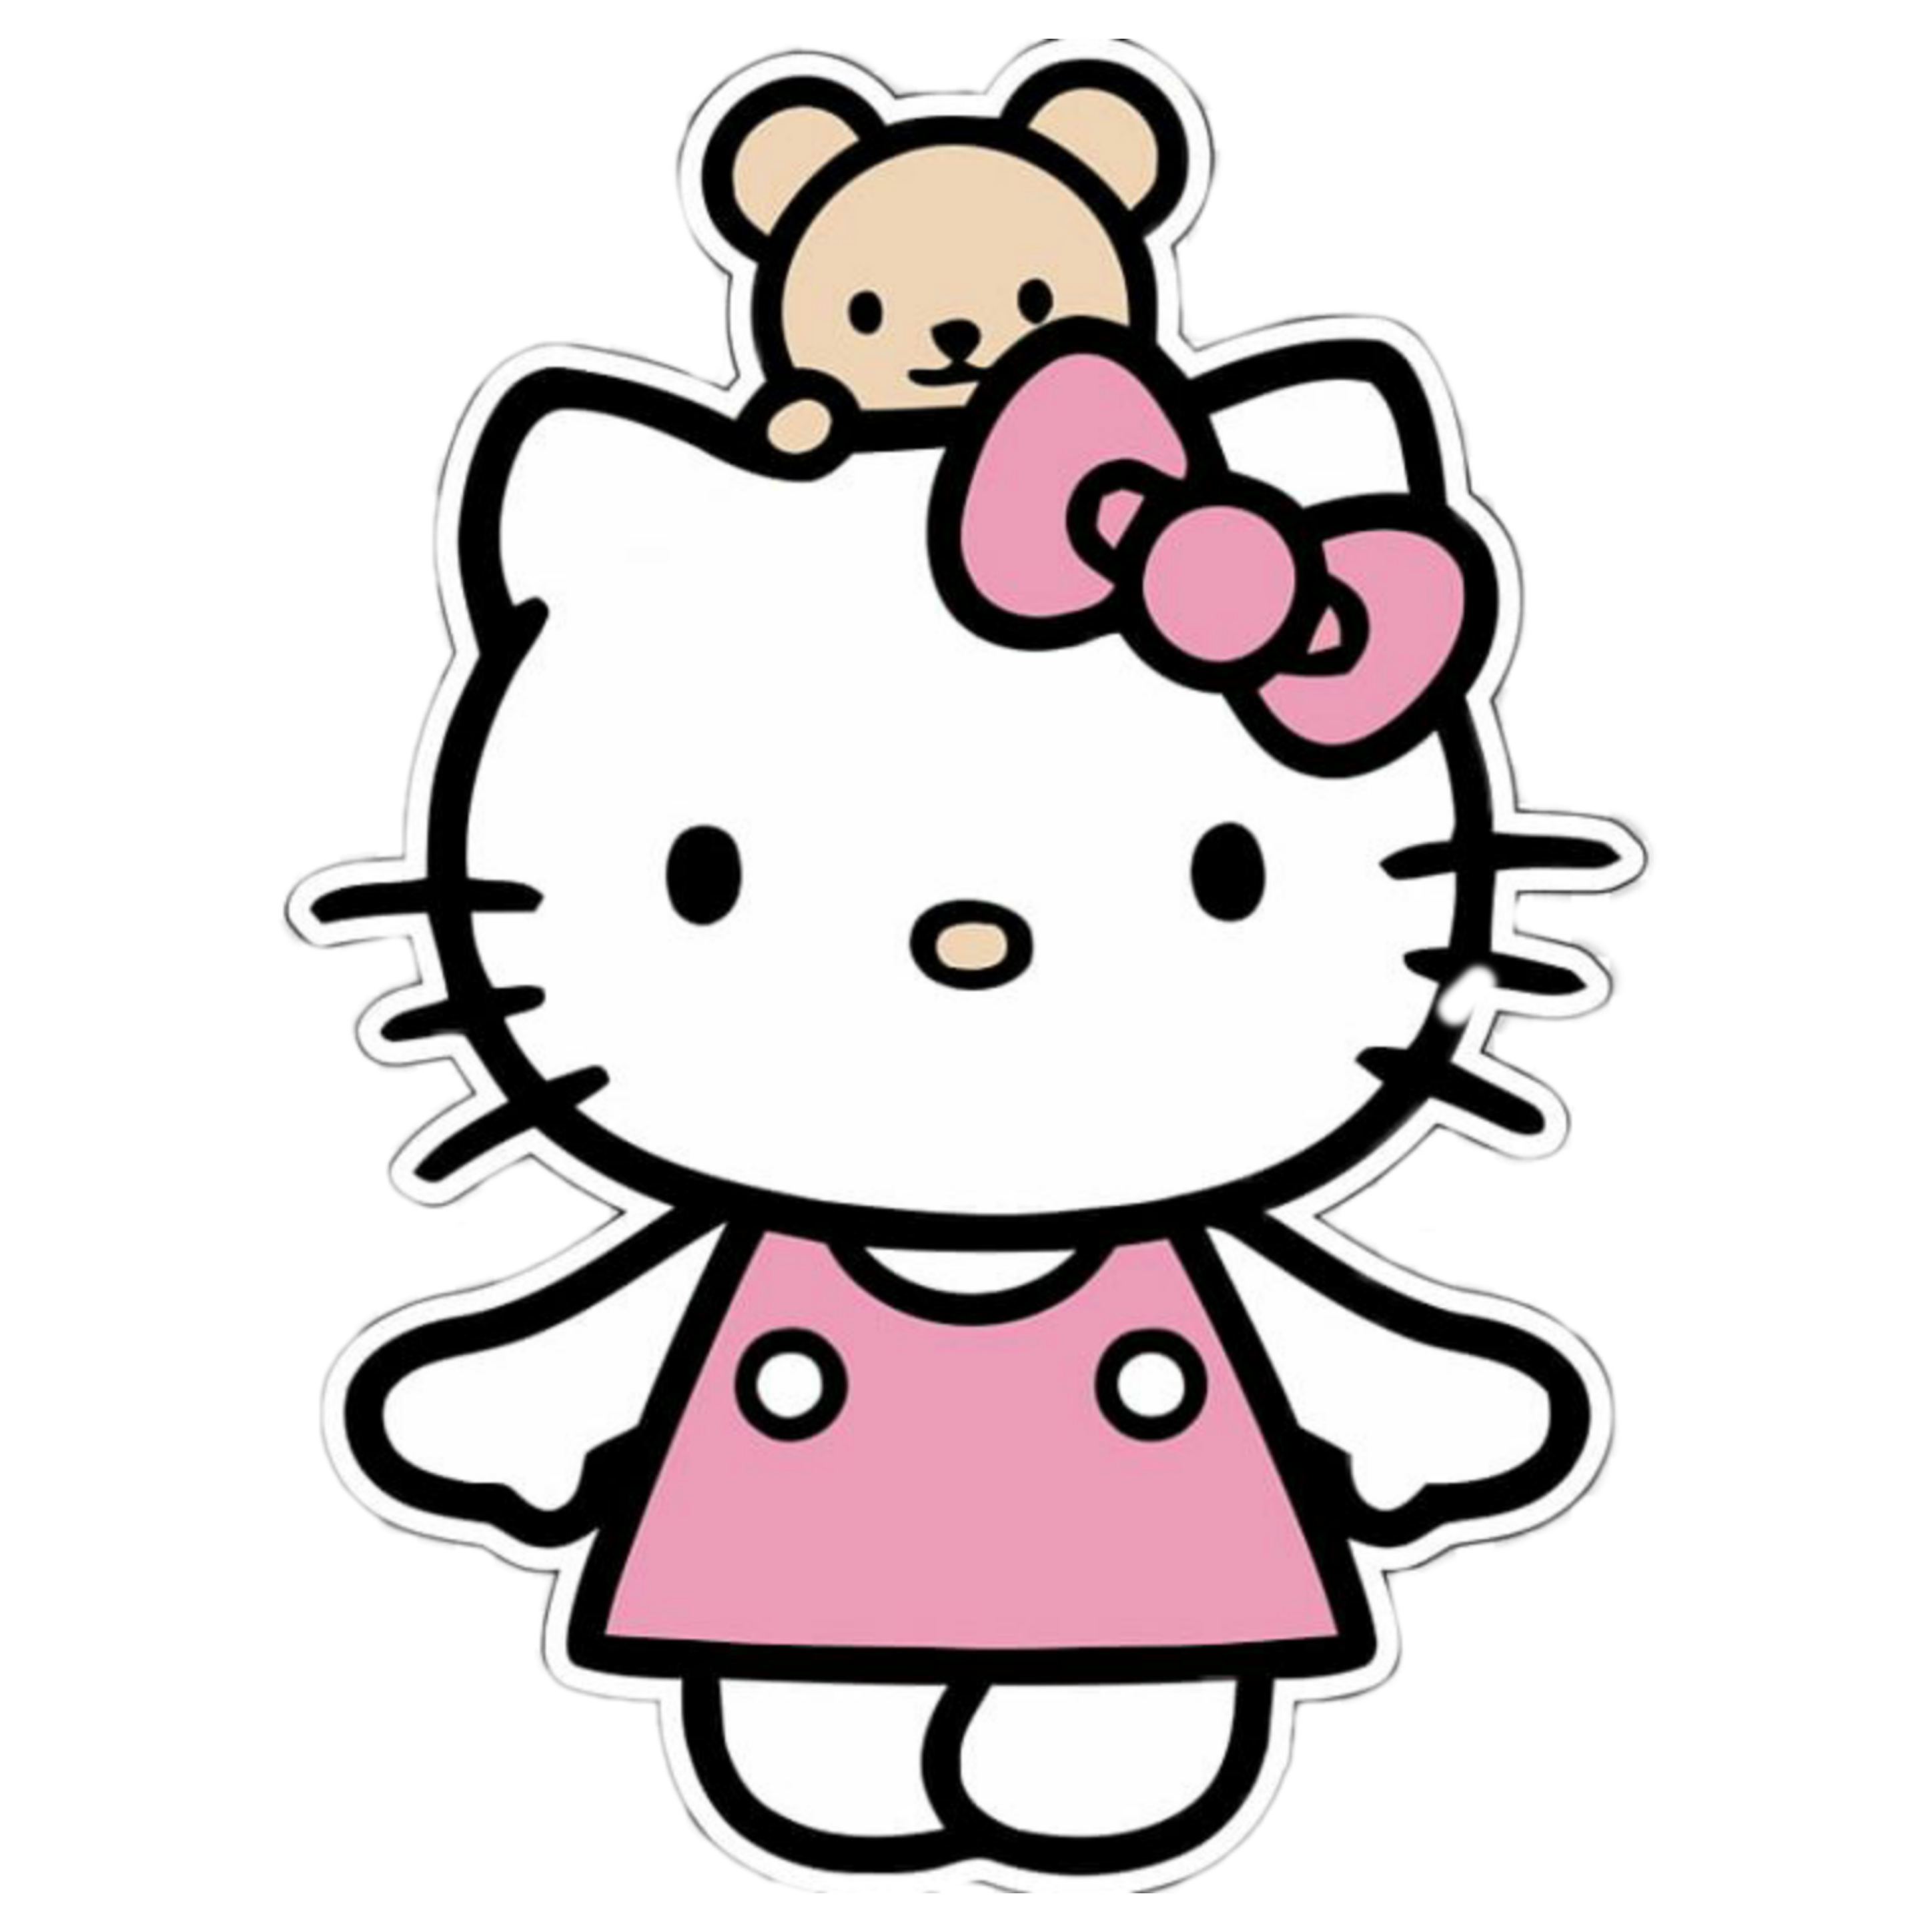 Hello Kitty - Hello Kitty Wallpaper (181642) - Fanpop - Page 57